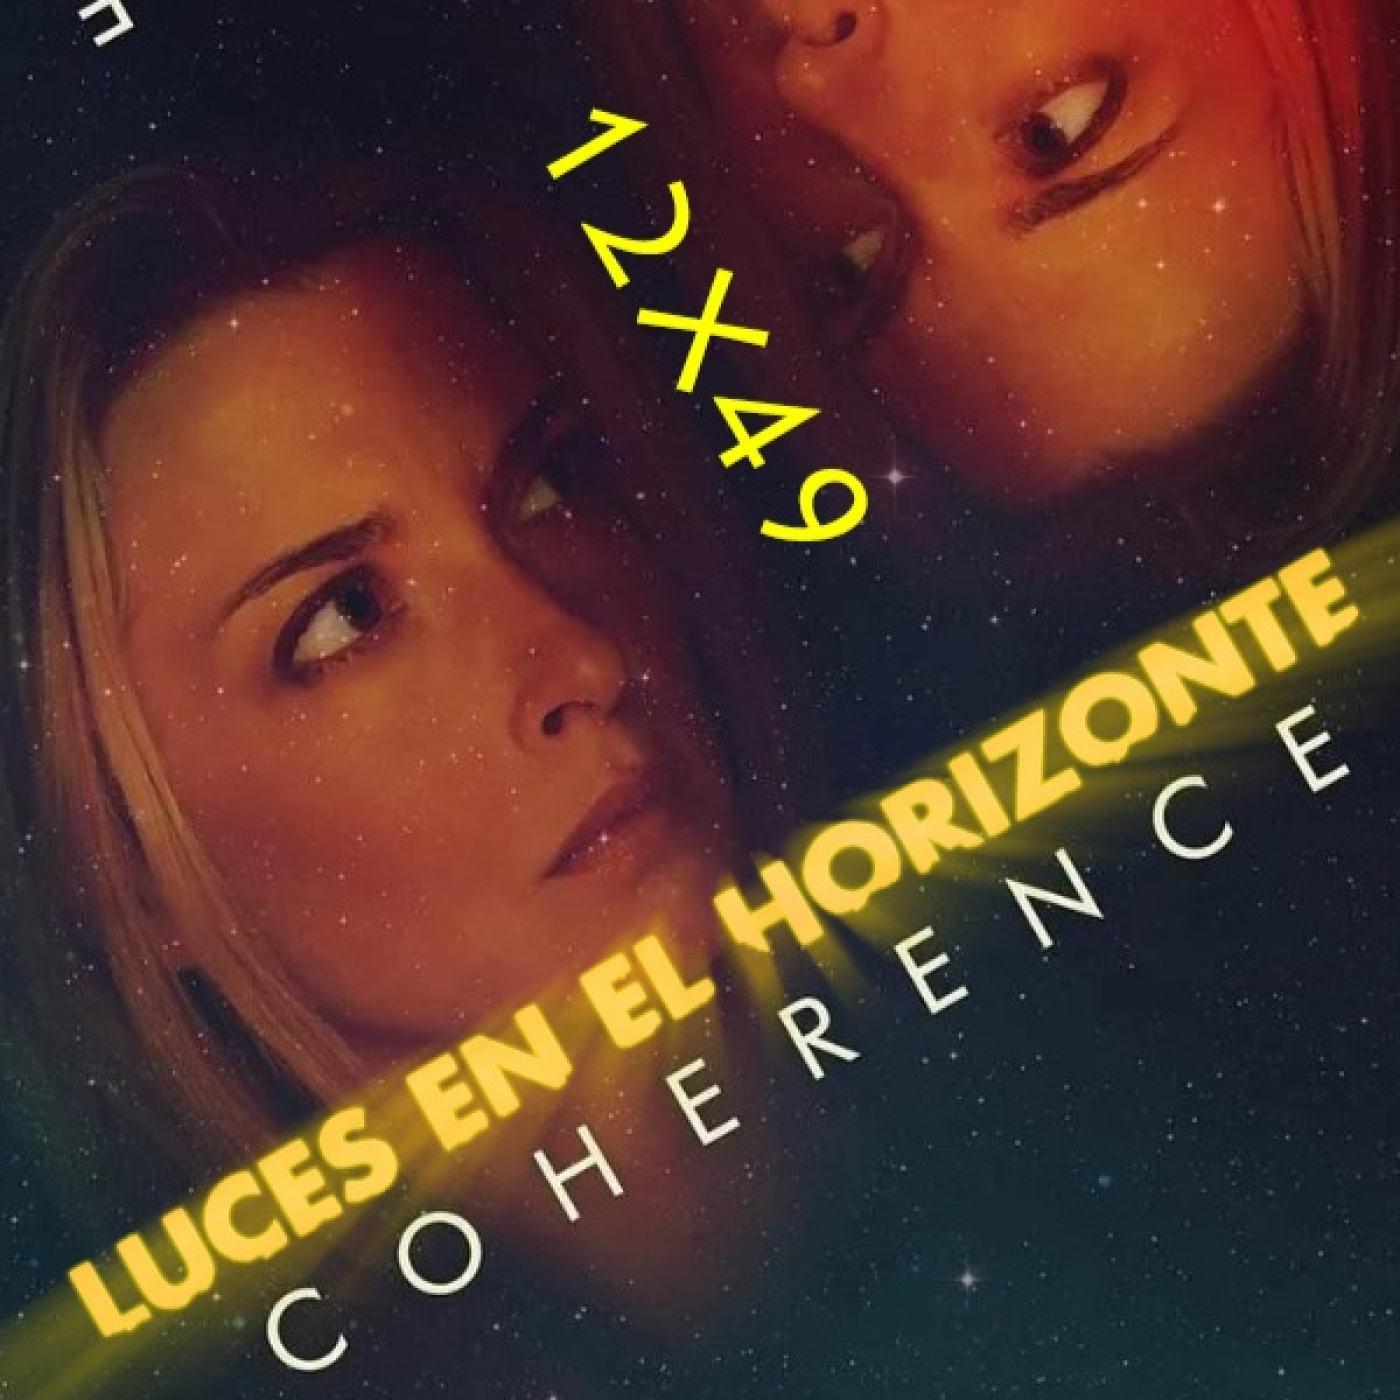 Coherence - Luces en el Horizonte 12X49 - Episodio exclusivo para mecenas